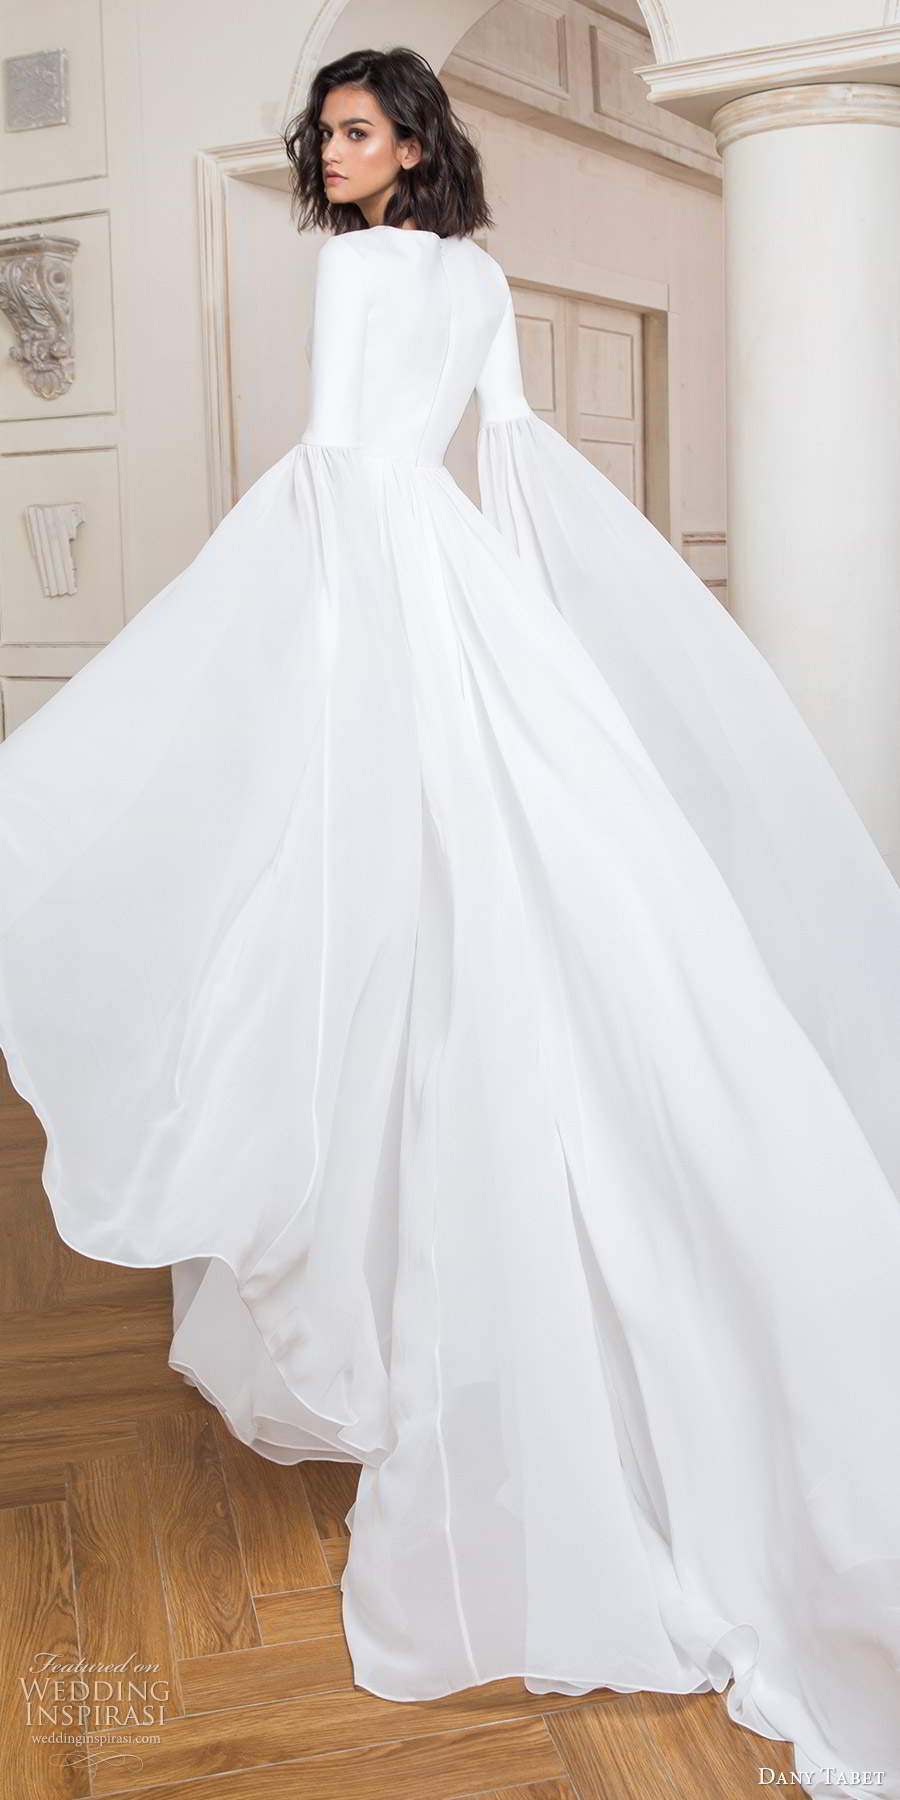 dany tabet 2020 bridal long split sleeves plunging v neckline minimalist clean a line ball gown wedding dress slit skirt chapel train (20) bv